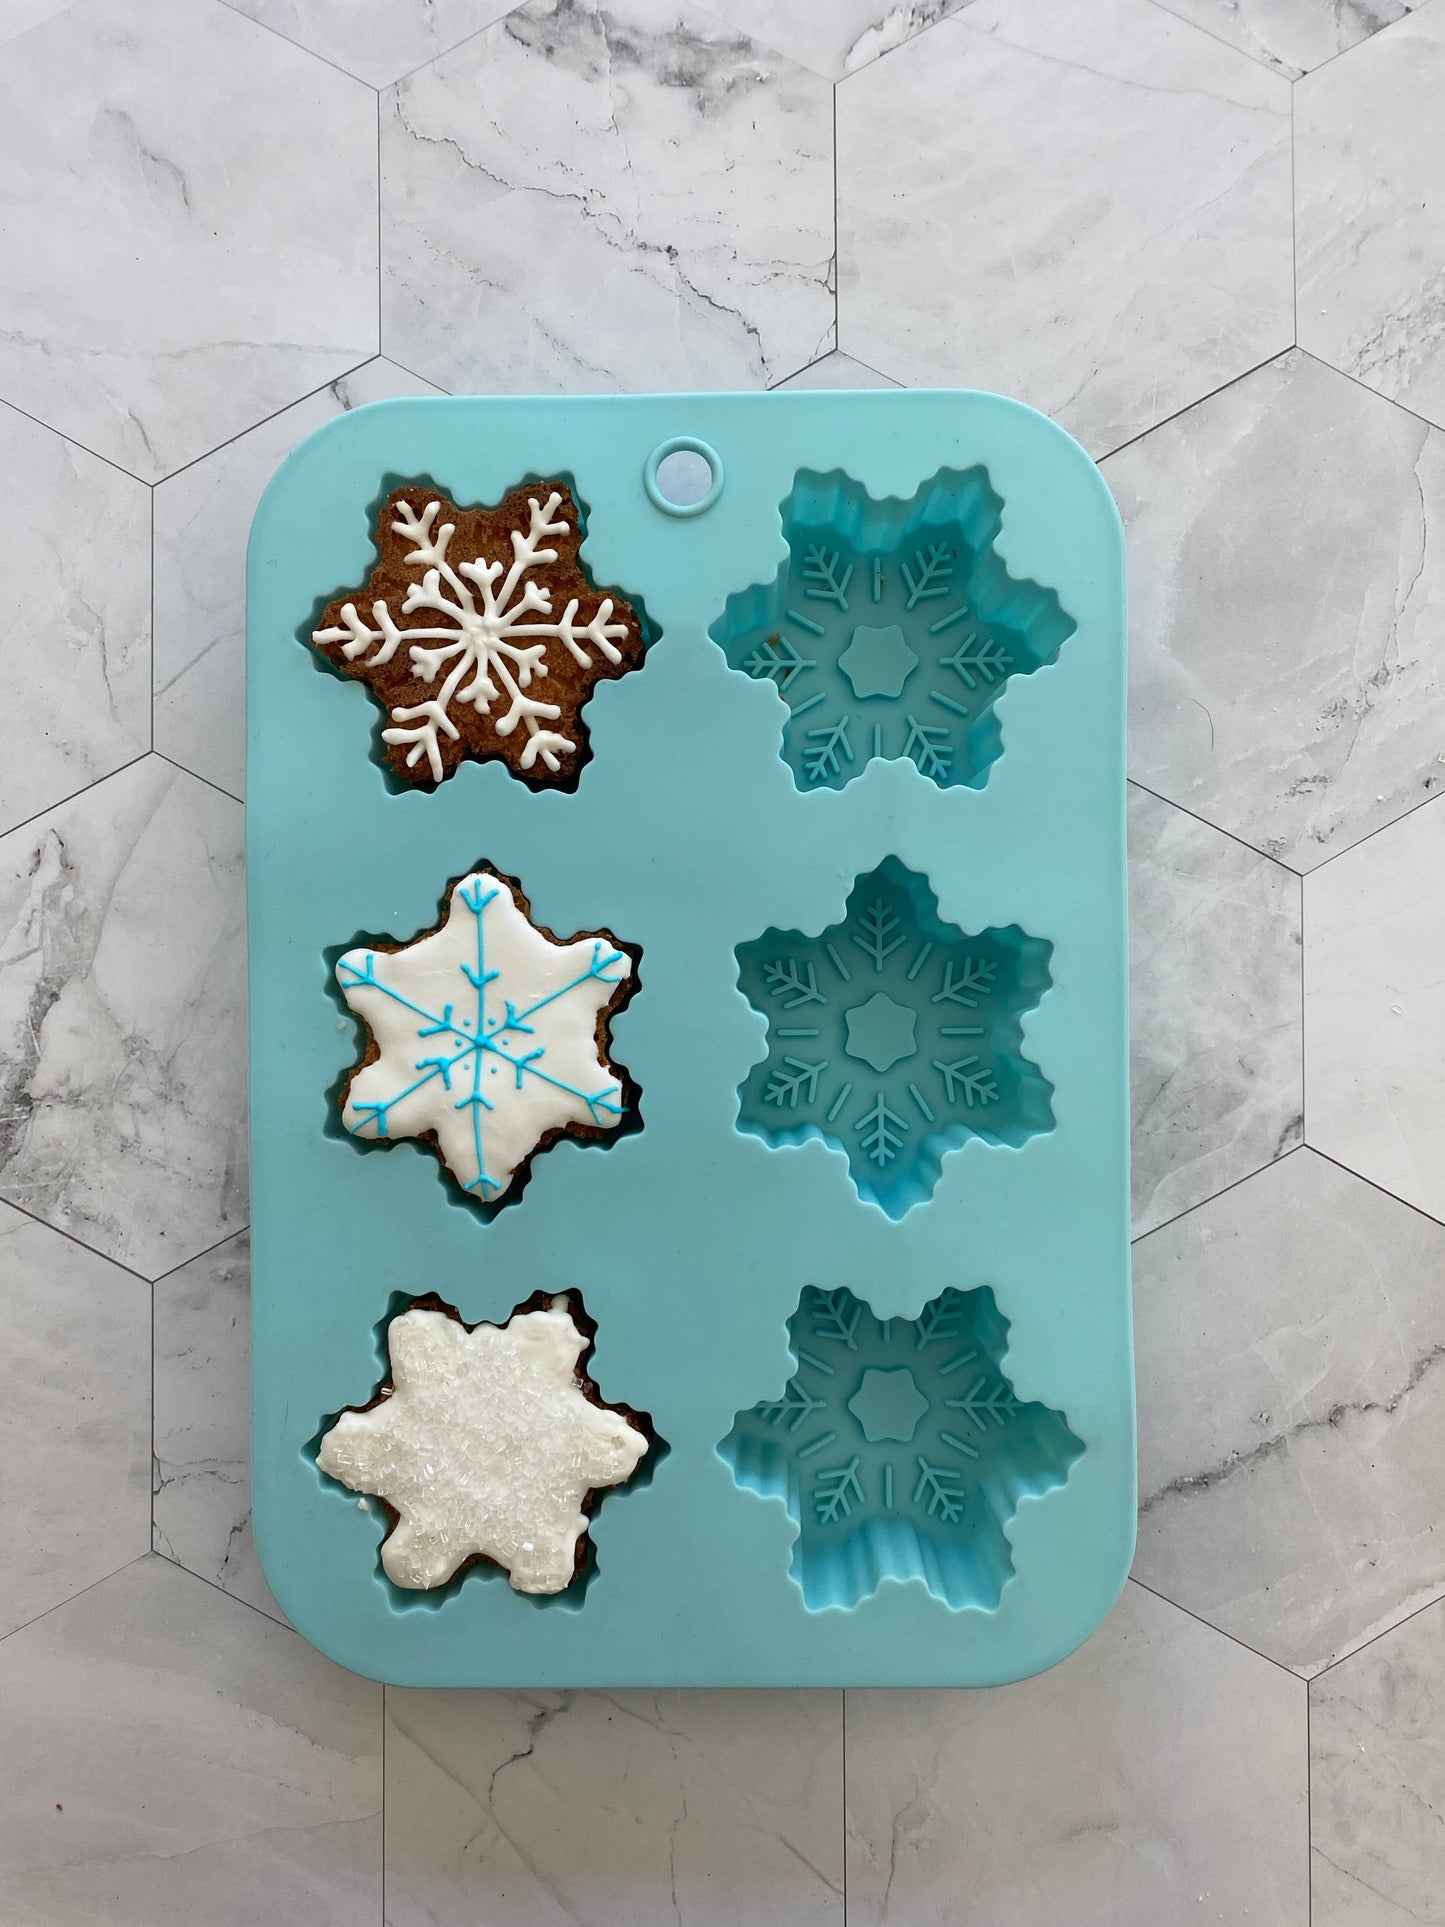 Winter Wonderland Silicone Snowflake Cupcake Mold